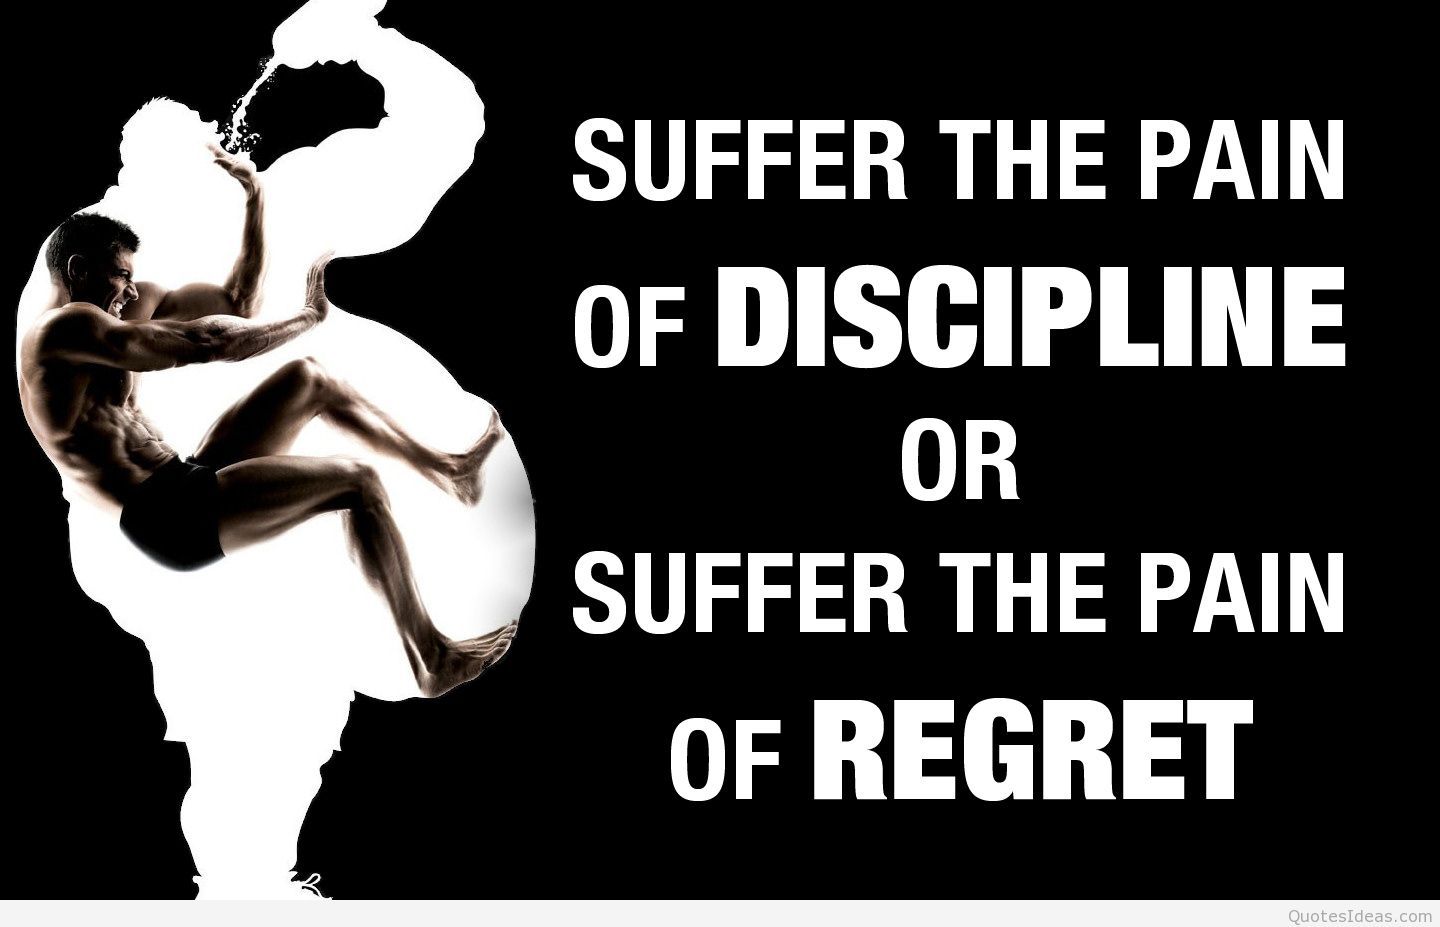 Pain of discipline quote wallpaper